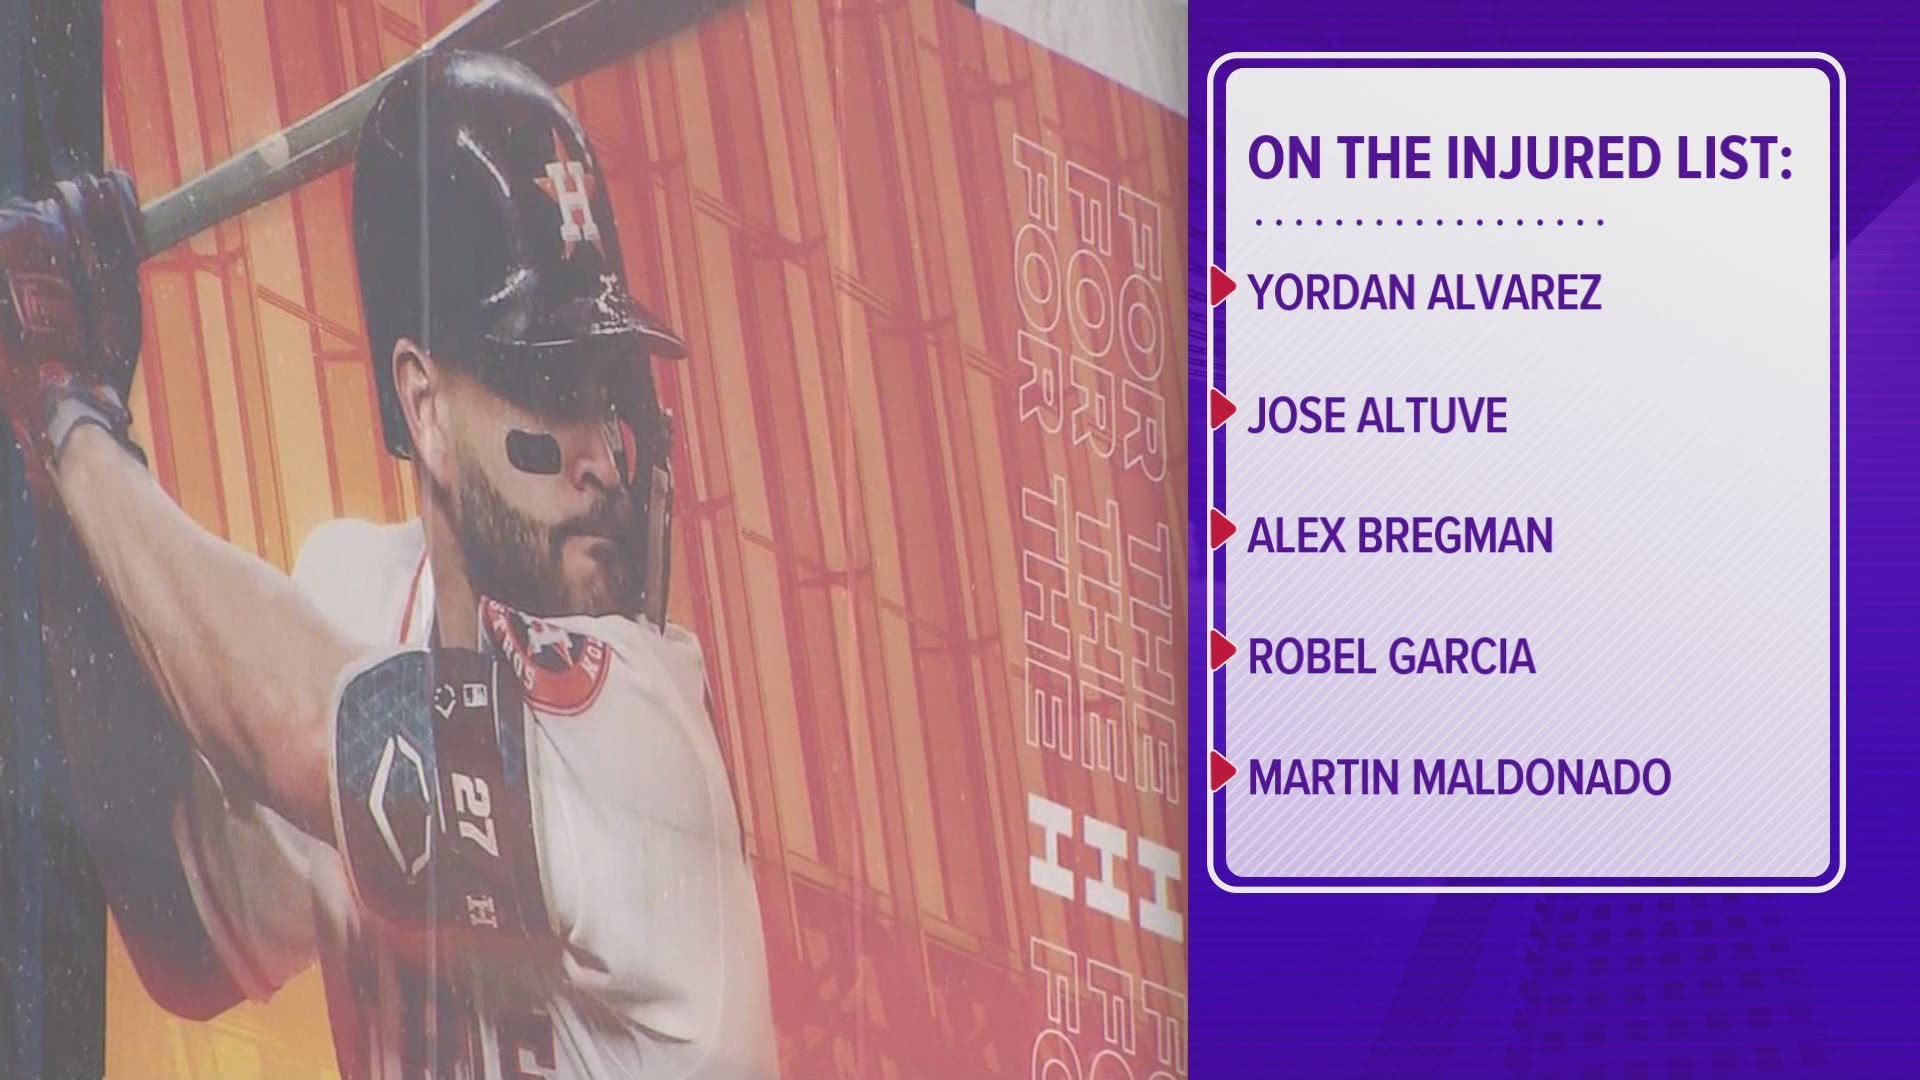 Jose Altuve, Alex Bregman, Yordan Alvarez, Martin Maldonado and Robel Garcia were placed on the injured list on Wednesday.